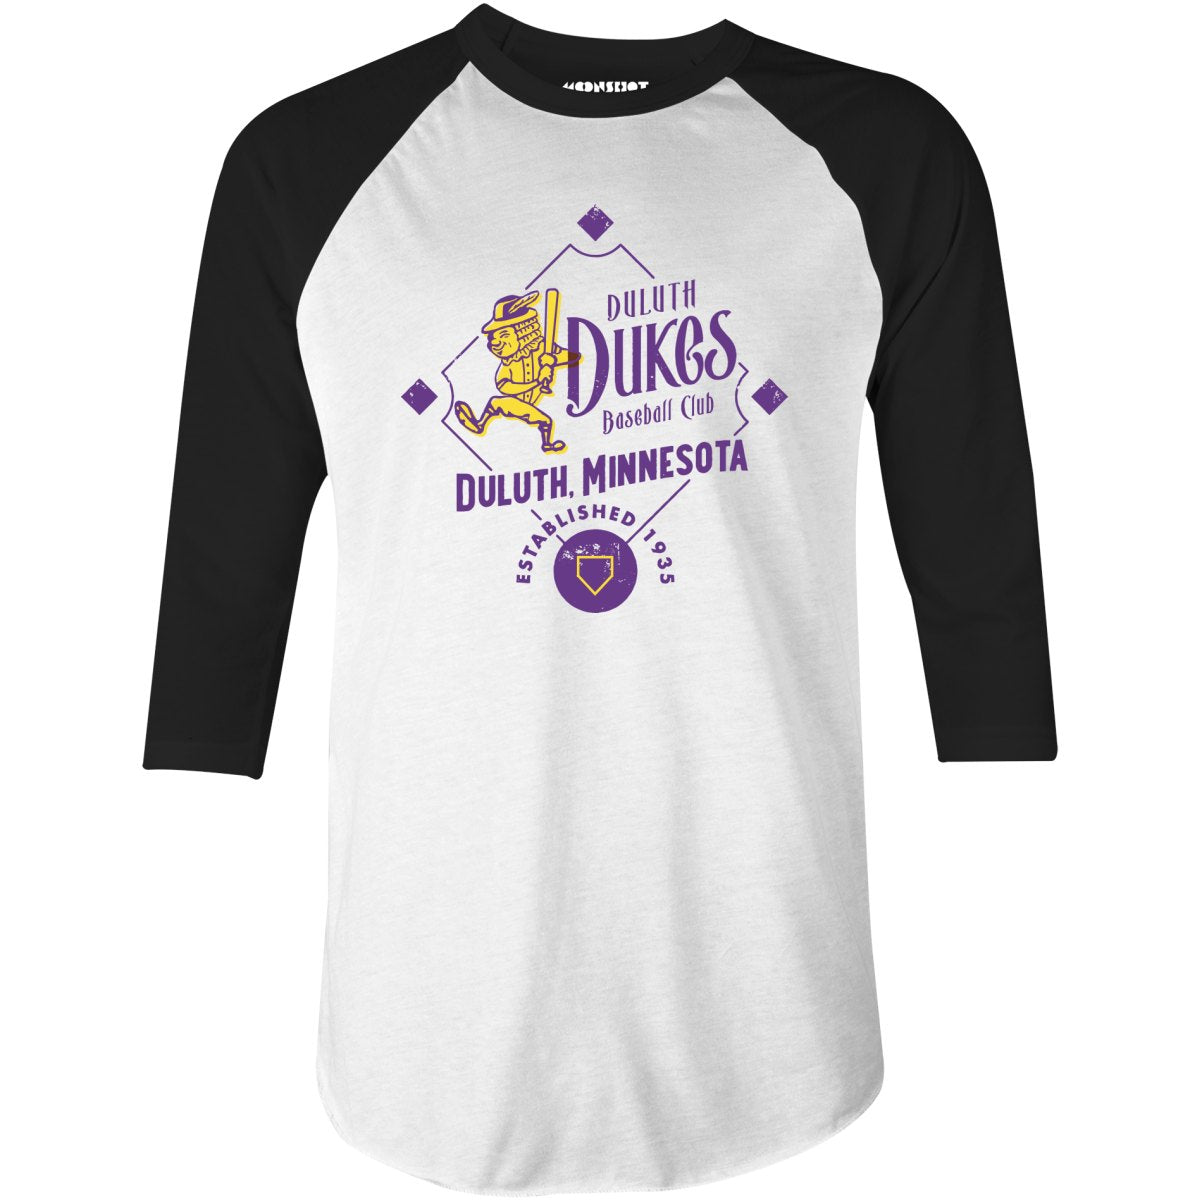 Duluth Dukes - Minnesota - Vintage Defunct Baseball Teams - 3/4 Sleeve Raglan T-Shirt